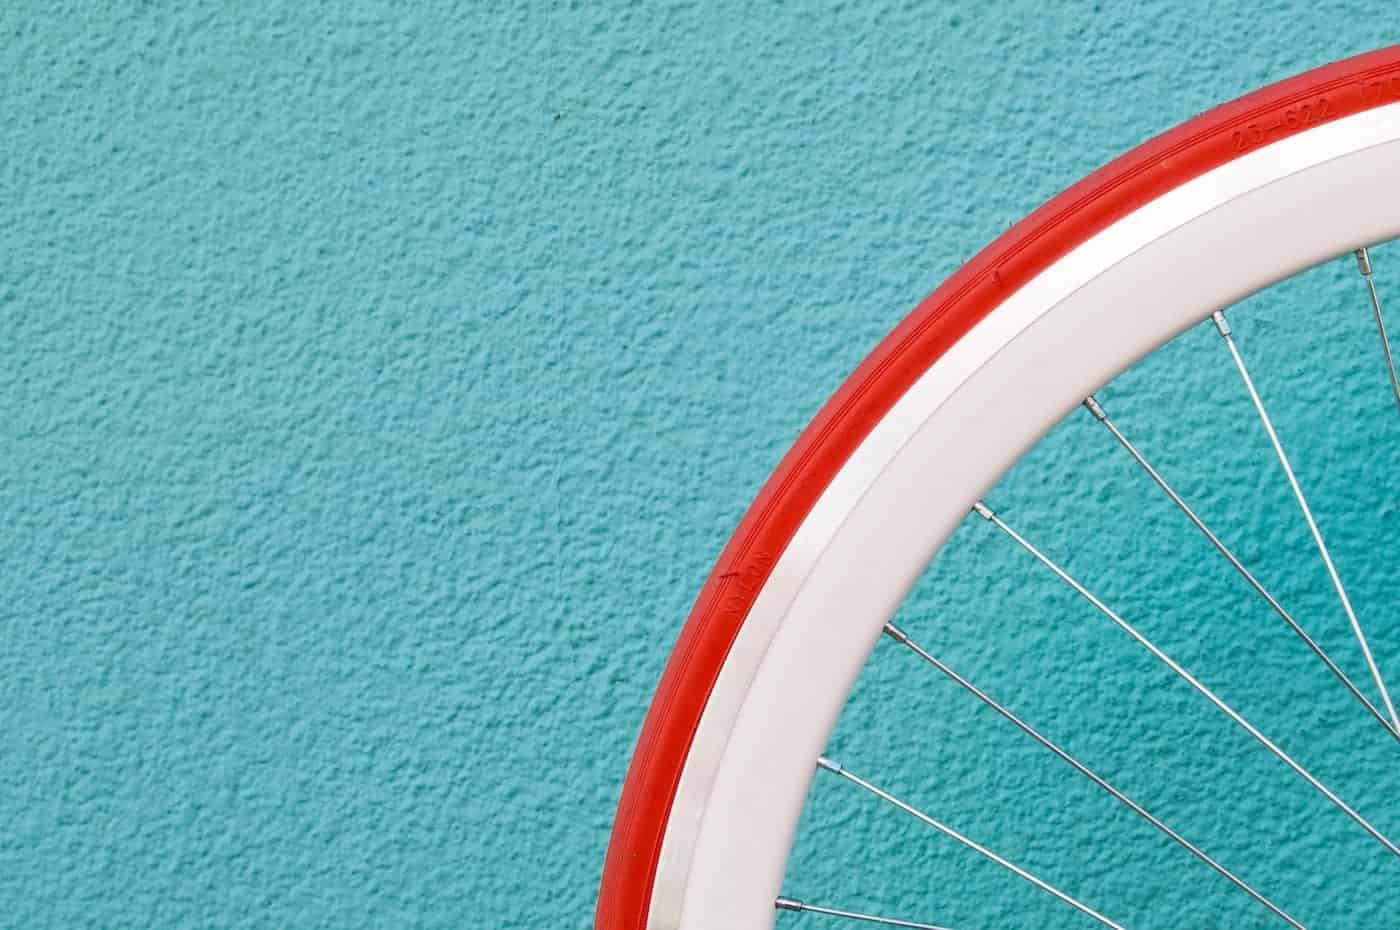 Minimal bike tire against a blue background